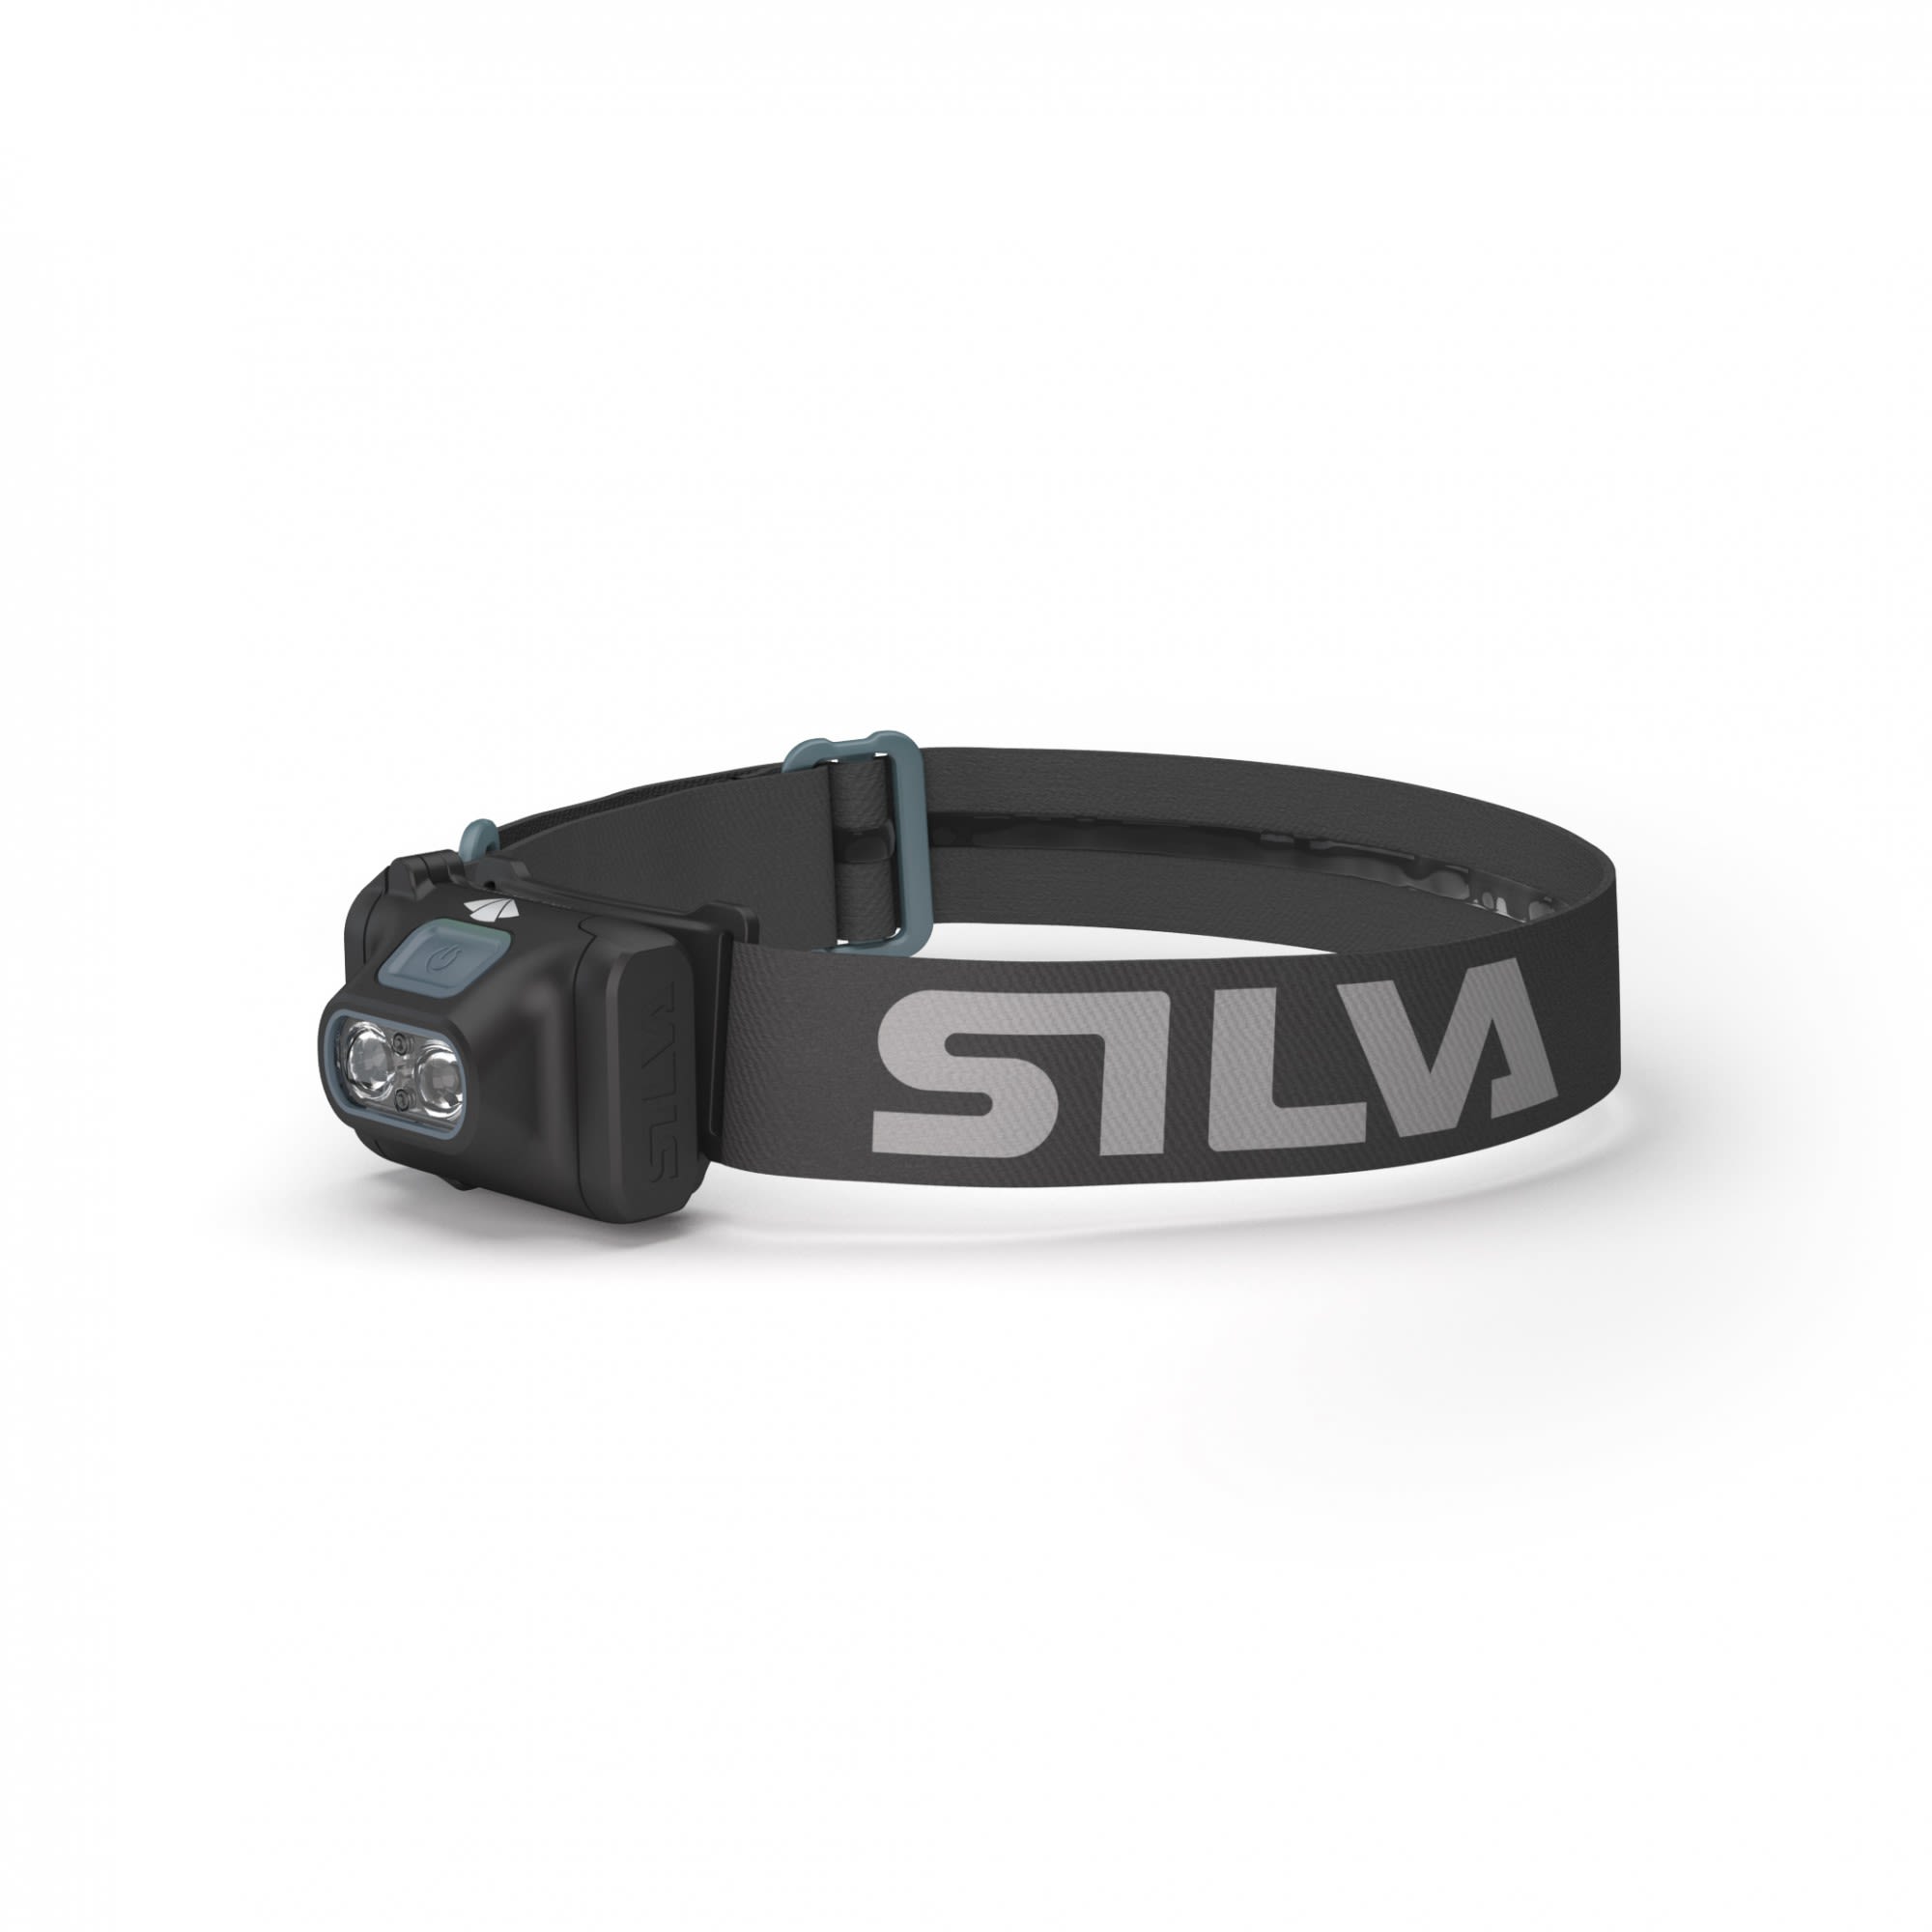 Silva Scout 3XT Schwarz- Stirnlampen- Grsse One Size - Farbe Black - Blue unter Silva